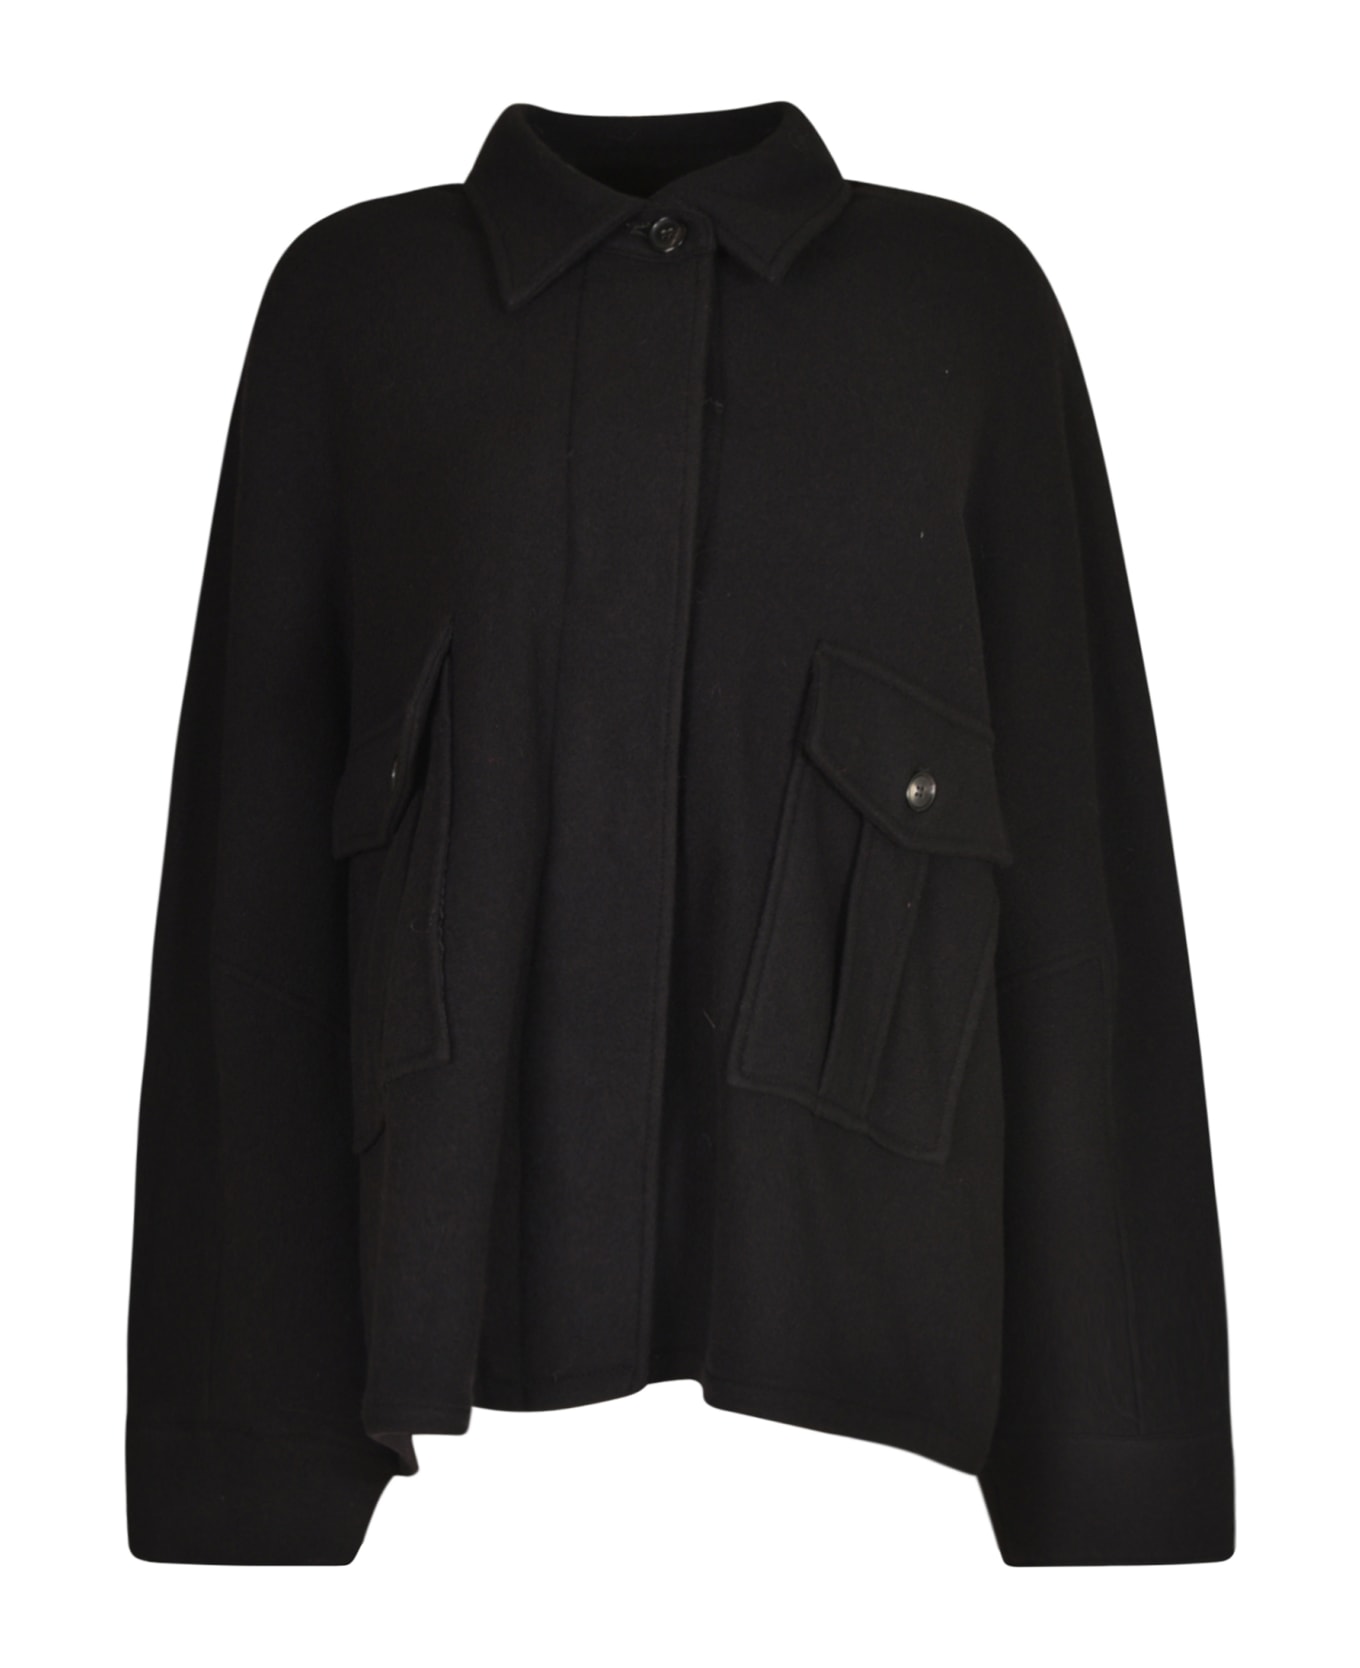 Alberto Biani Oversized Patched Pocket Jacket - Black